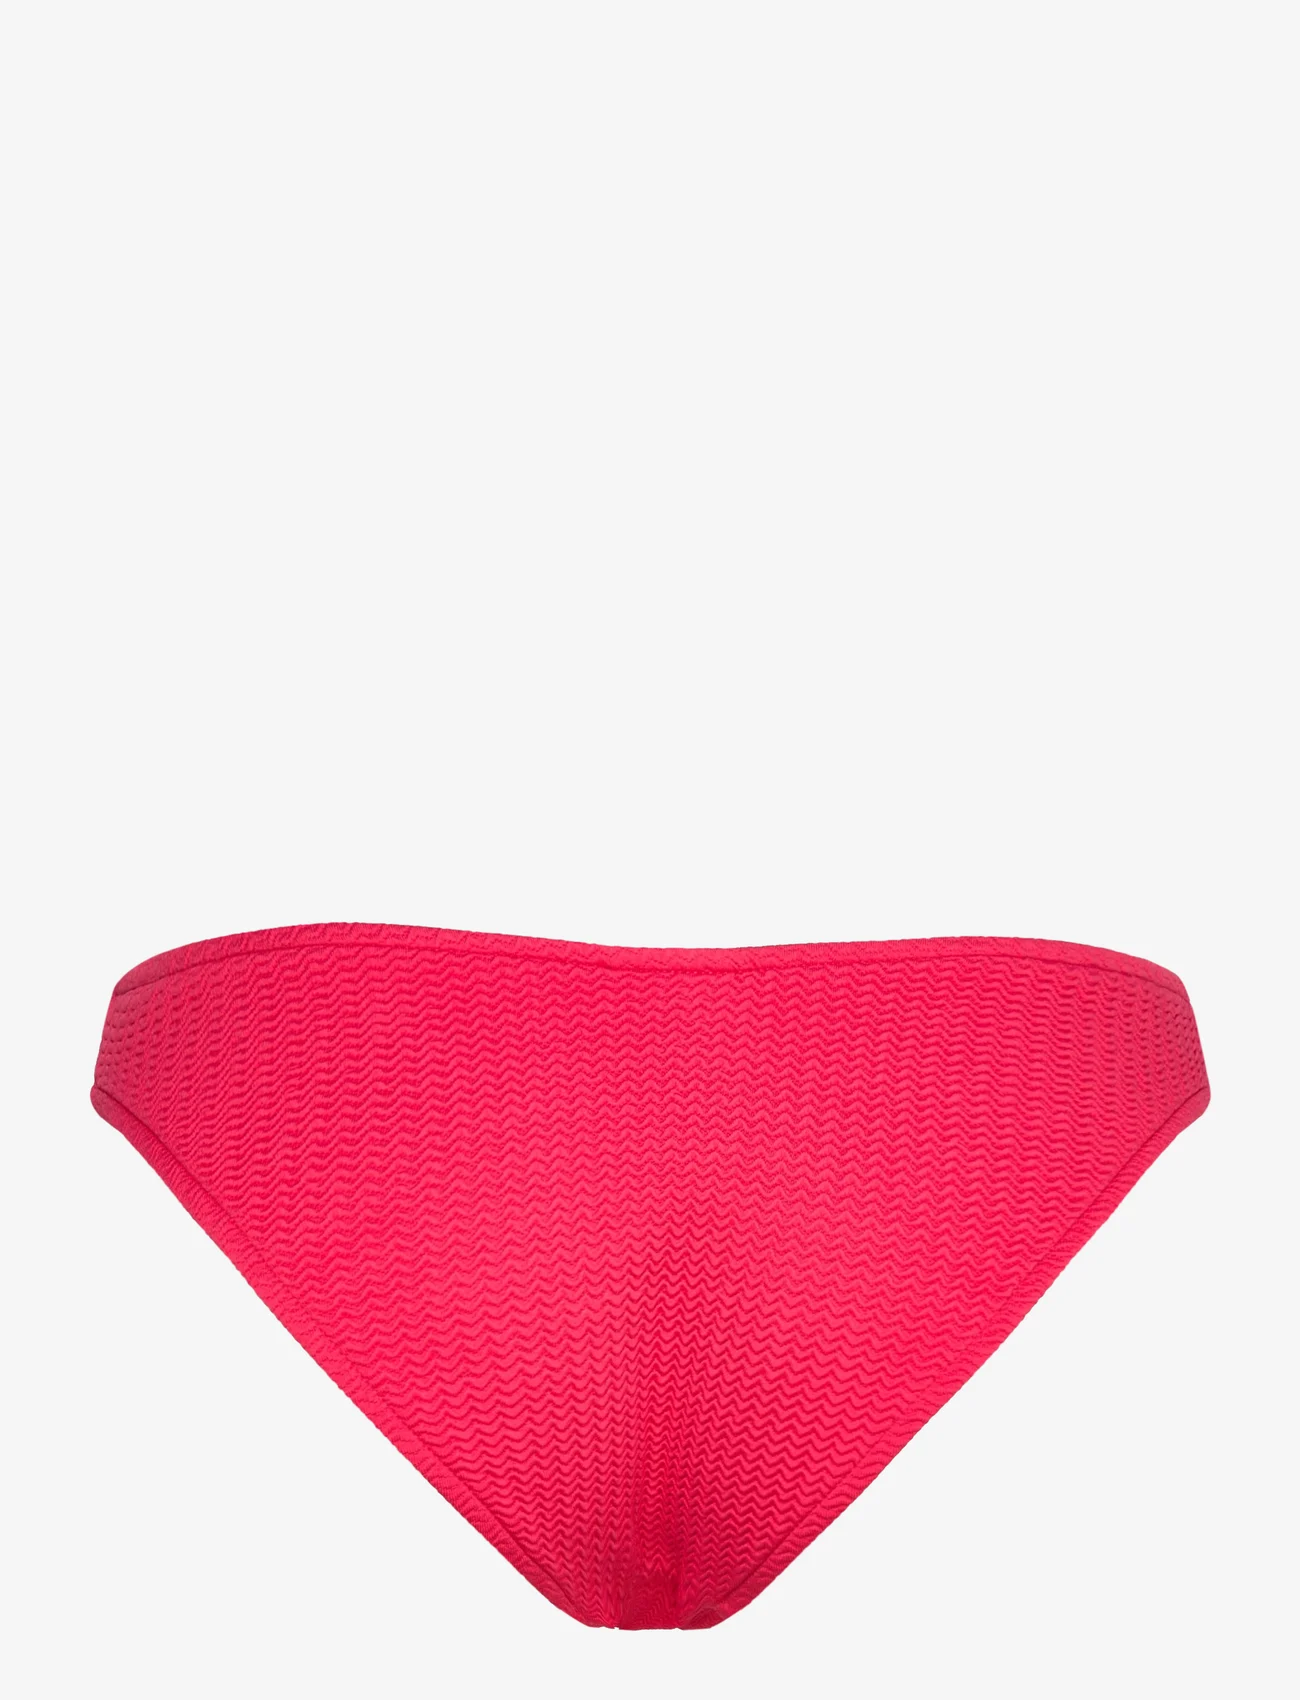 Seafolly - SeaDive High Cut Pant - bikini briefs - chilli red - 1